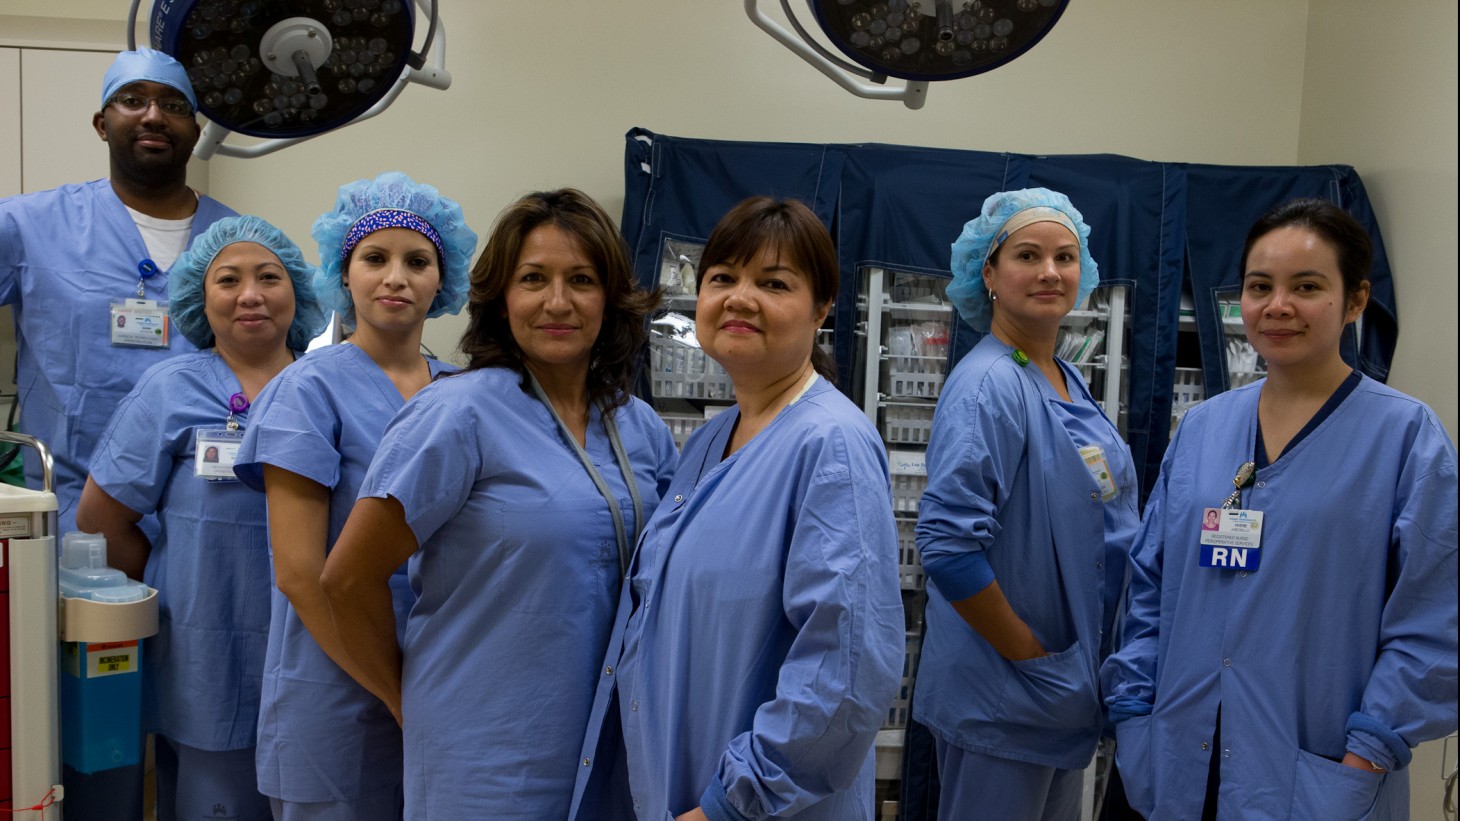 alt="Members of the Perioperative team at Ontario Medical Center."